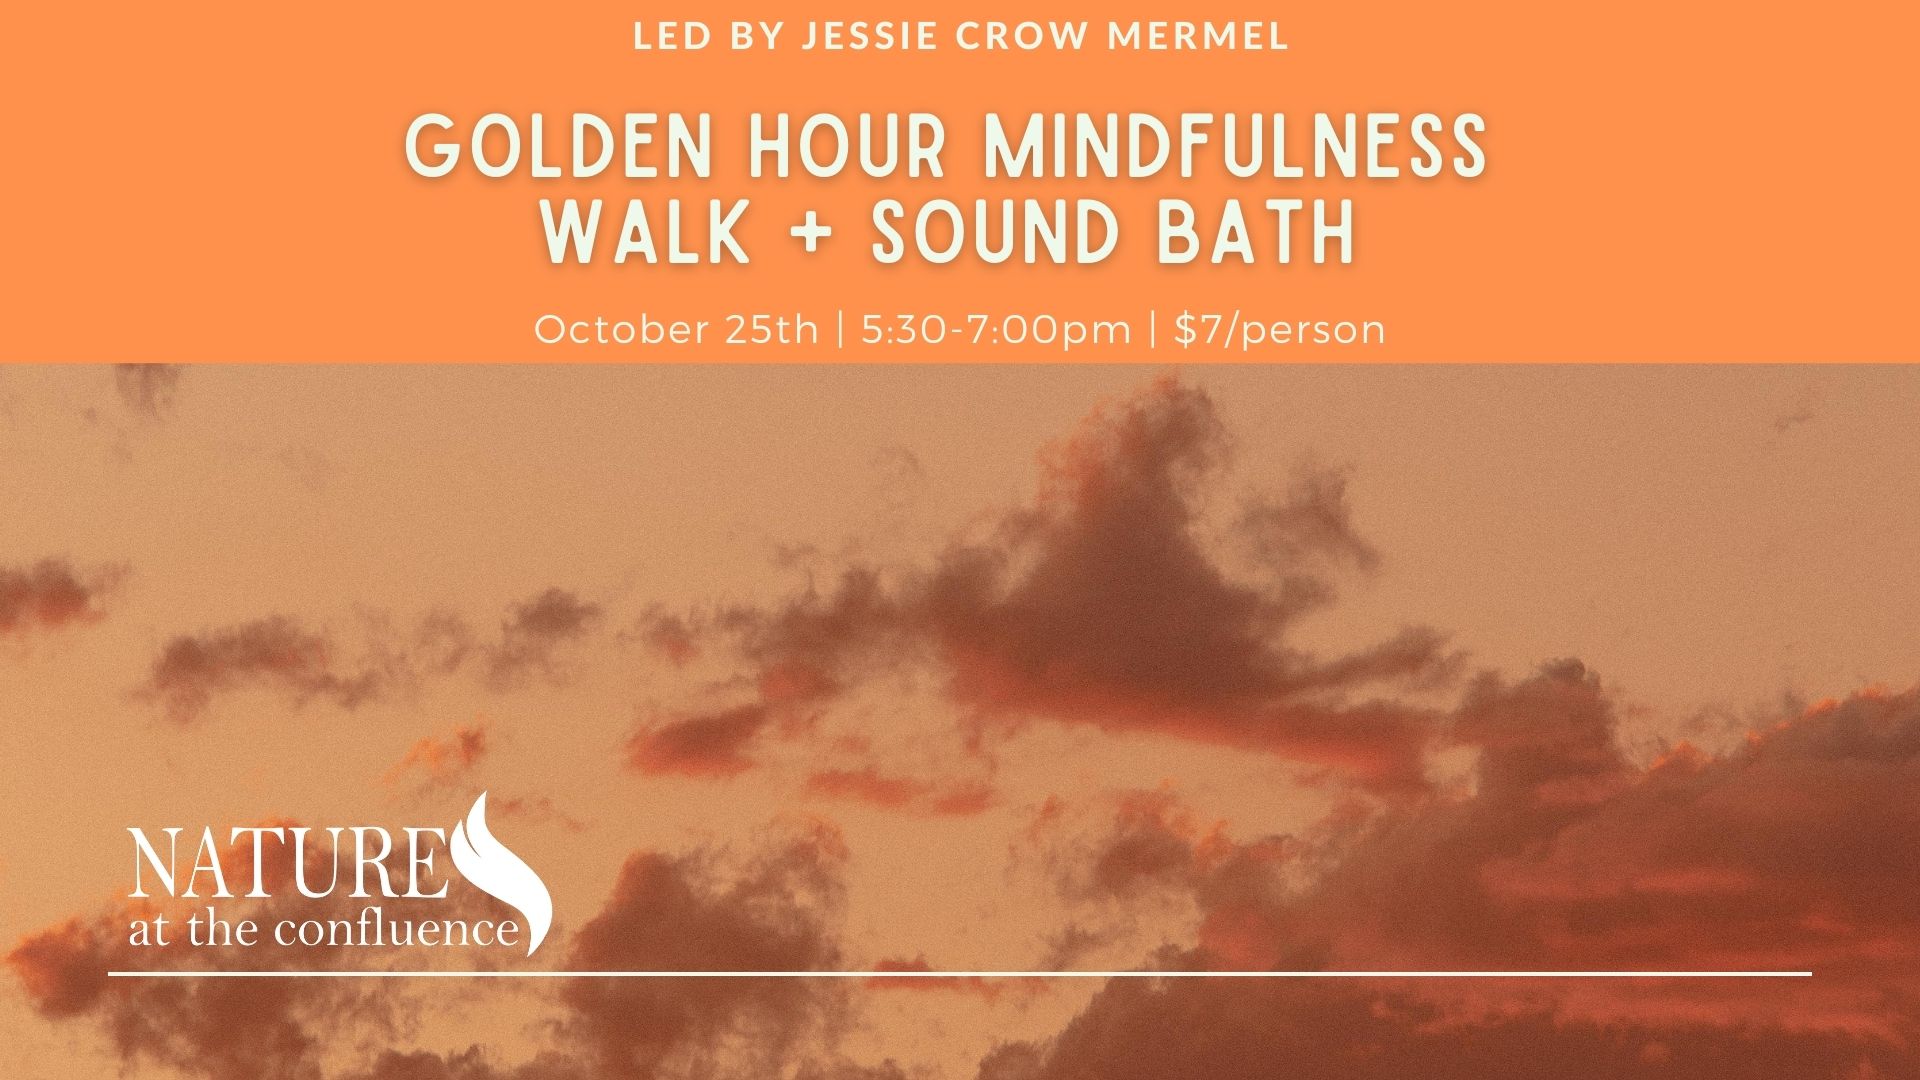 Gold﻿en Hour Mindfulness Walk + Sound Bath